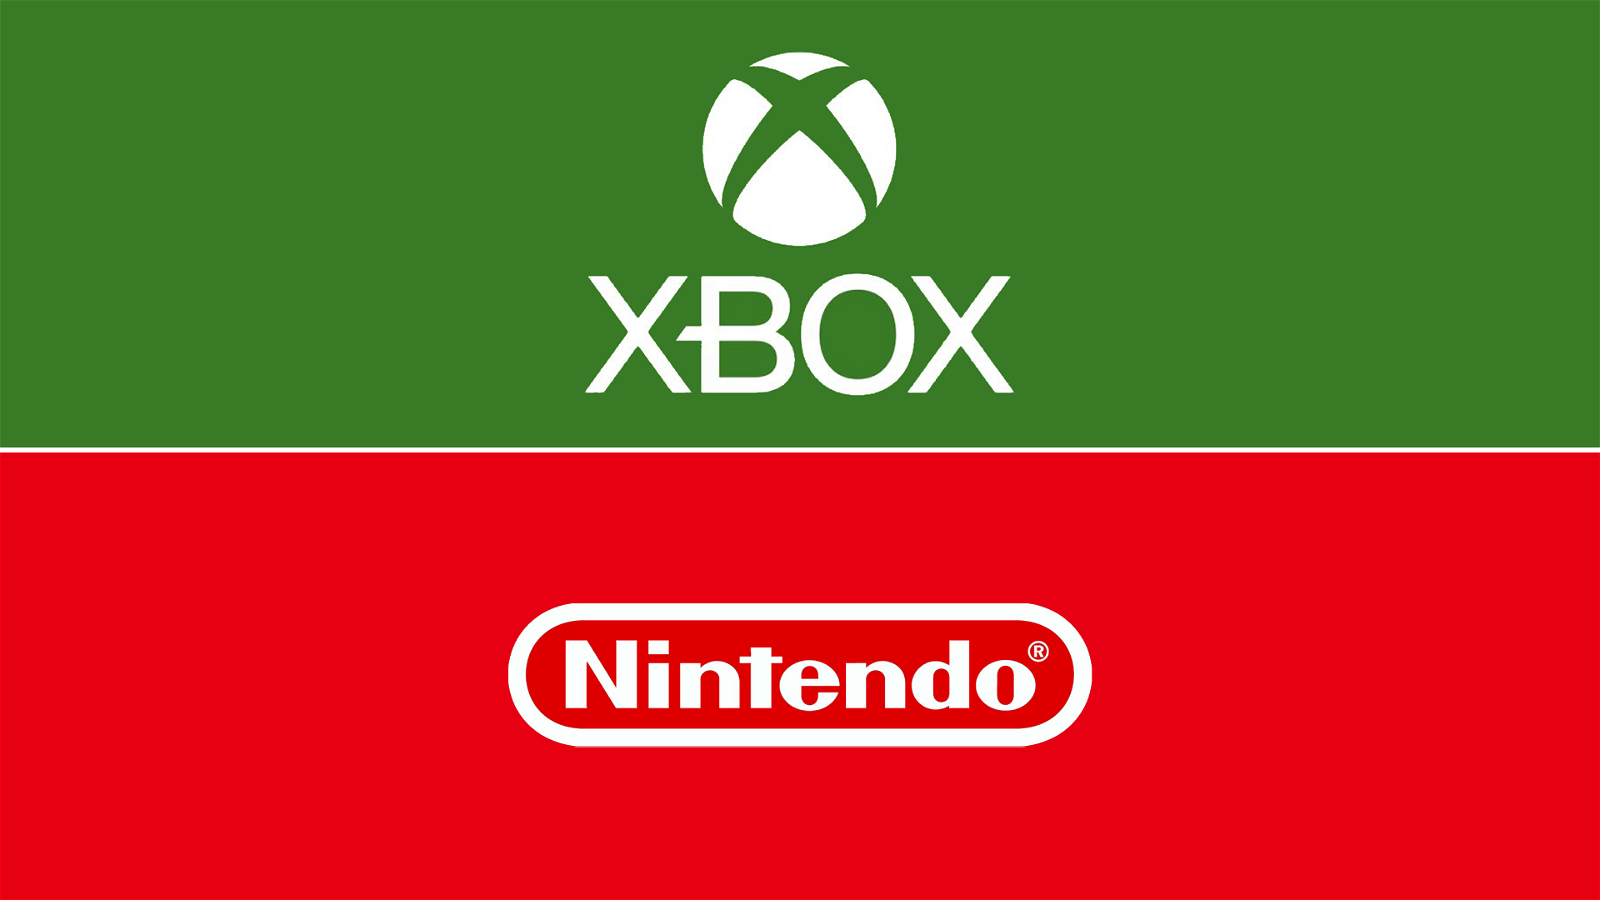 Xbox was still looking to buy Nintendo in 2020.